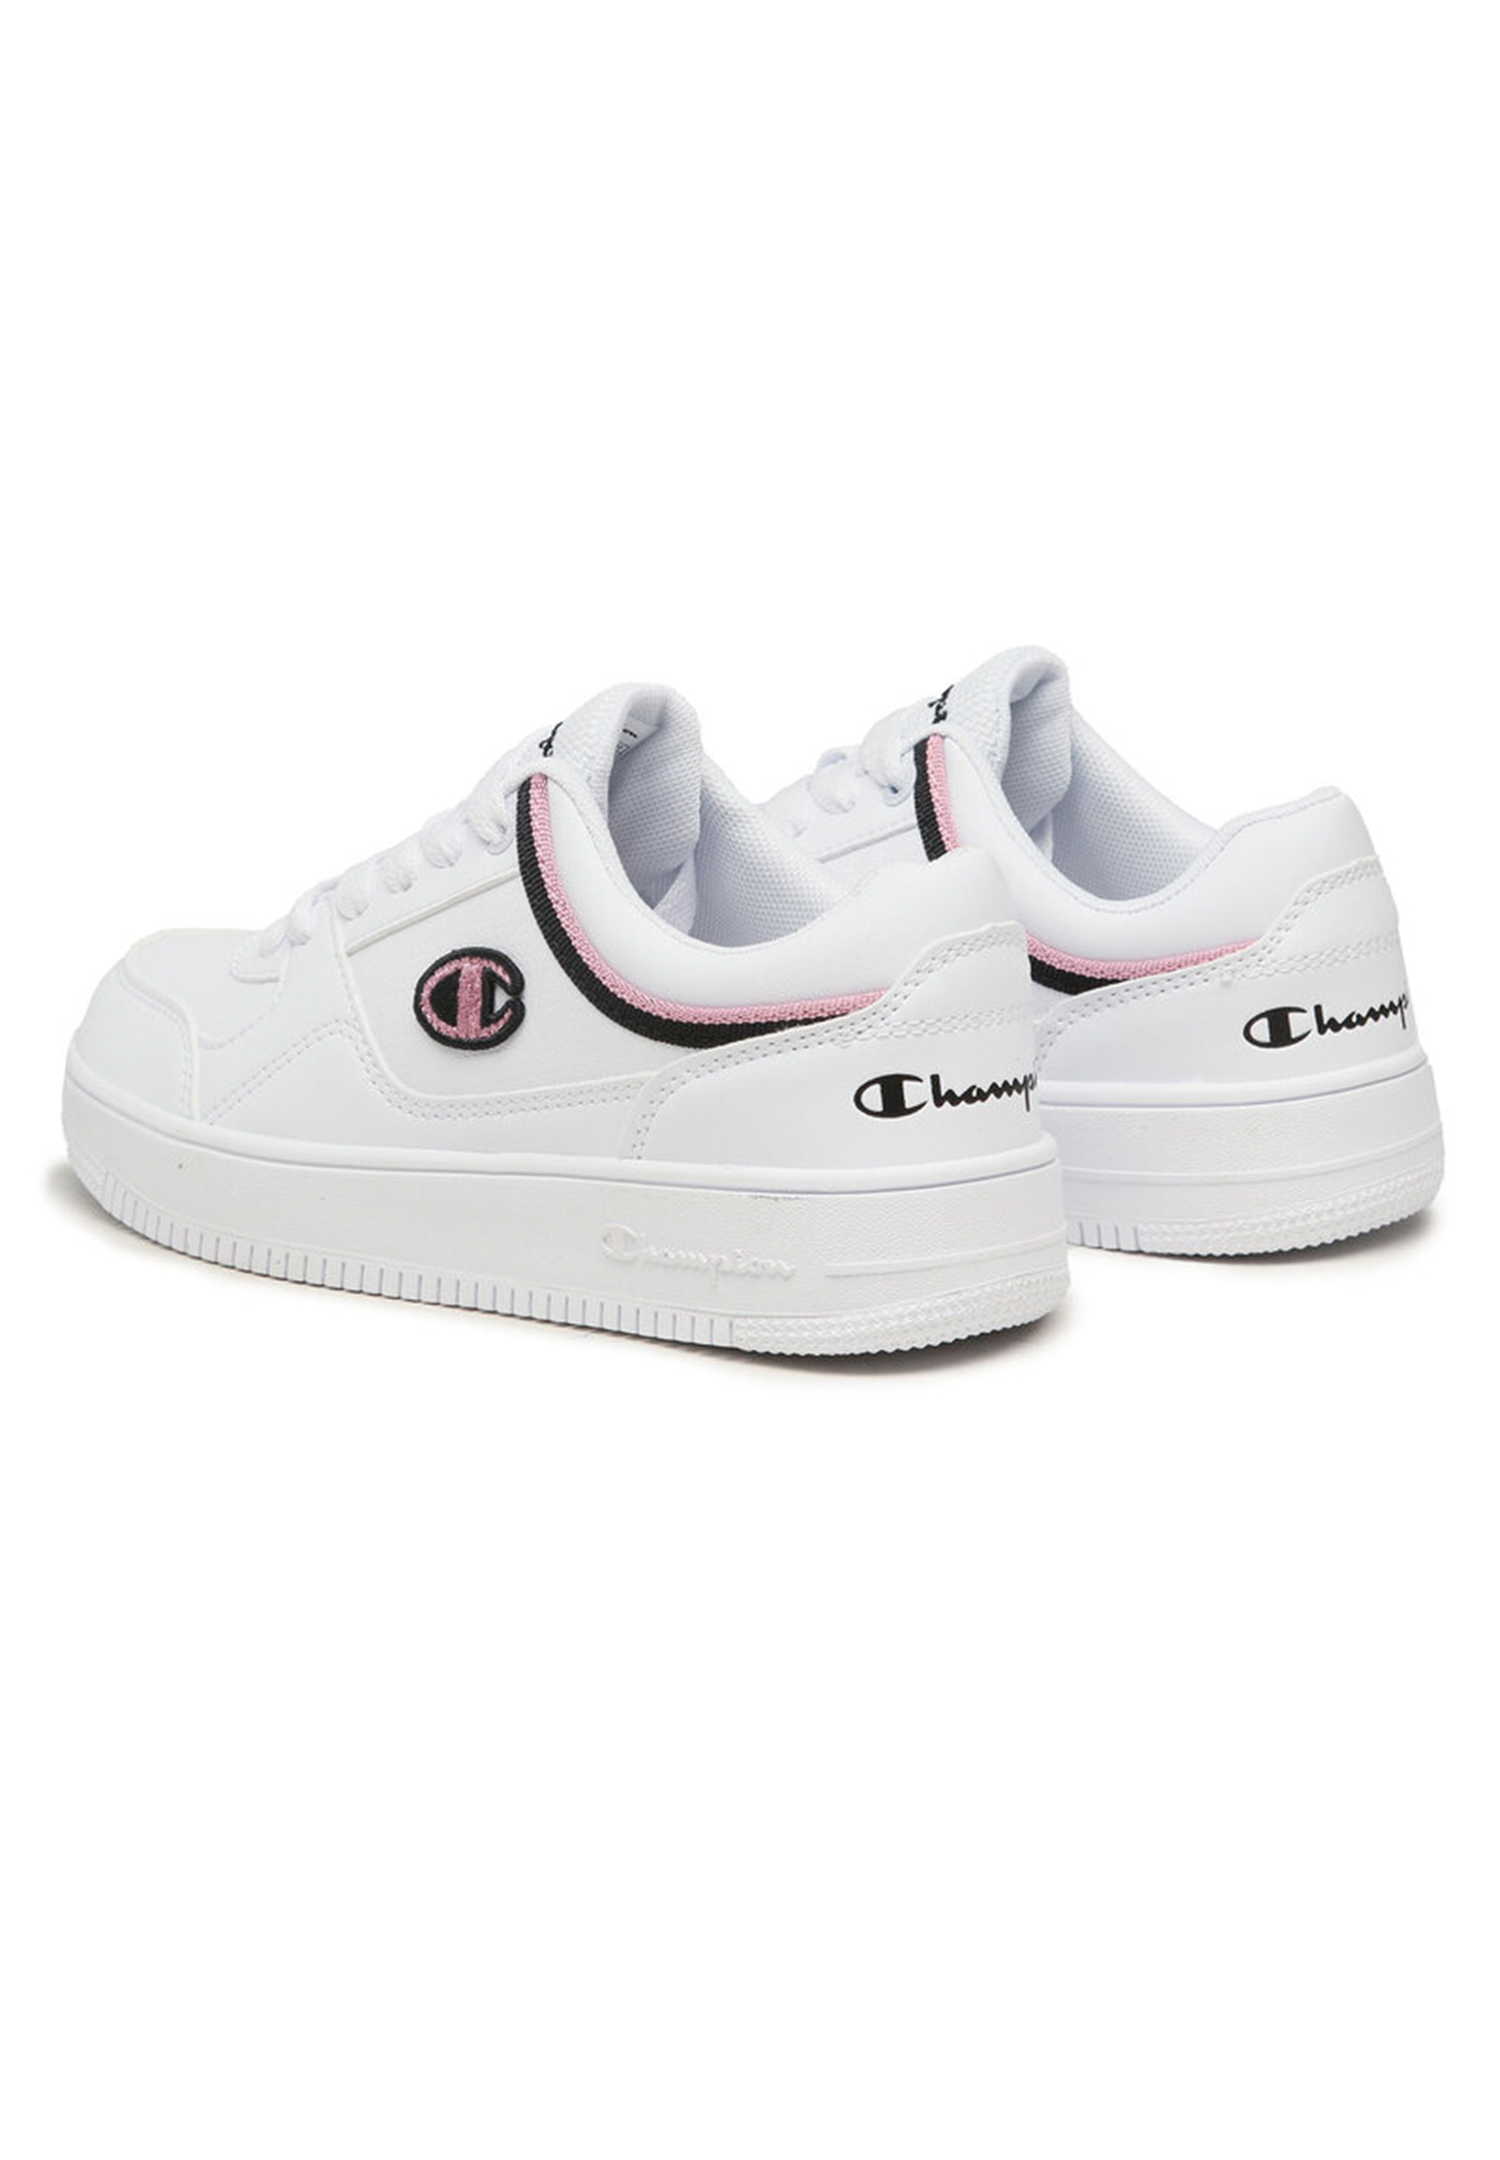 Champion REBOUND LOW Damen Sneaker S11469-CHA-WW010 weiss/pink